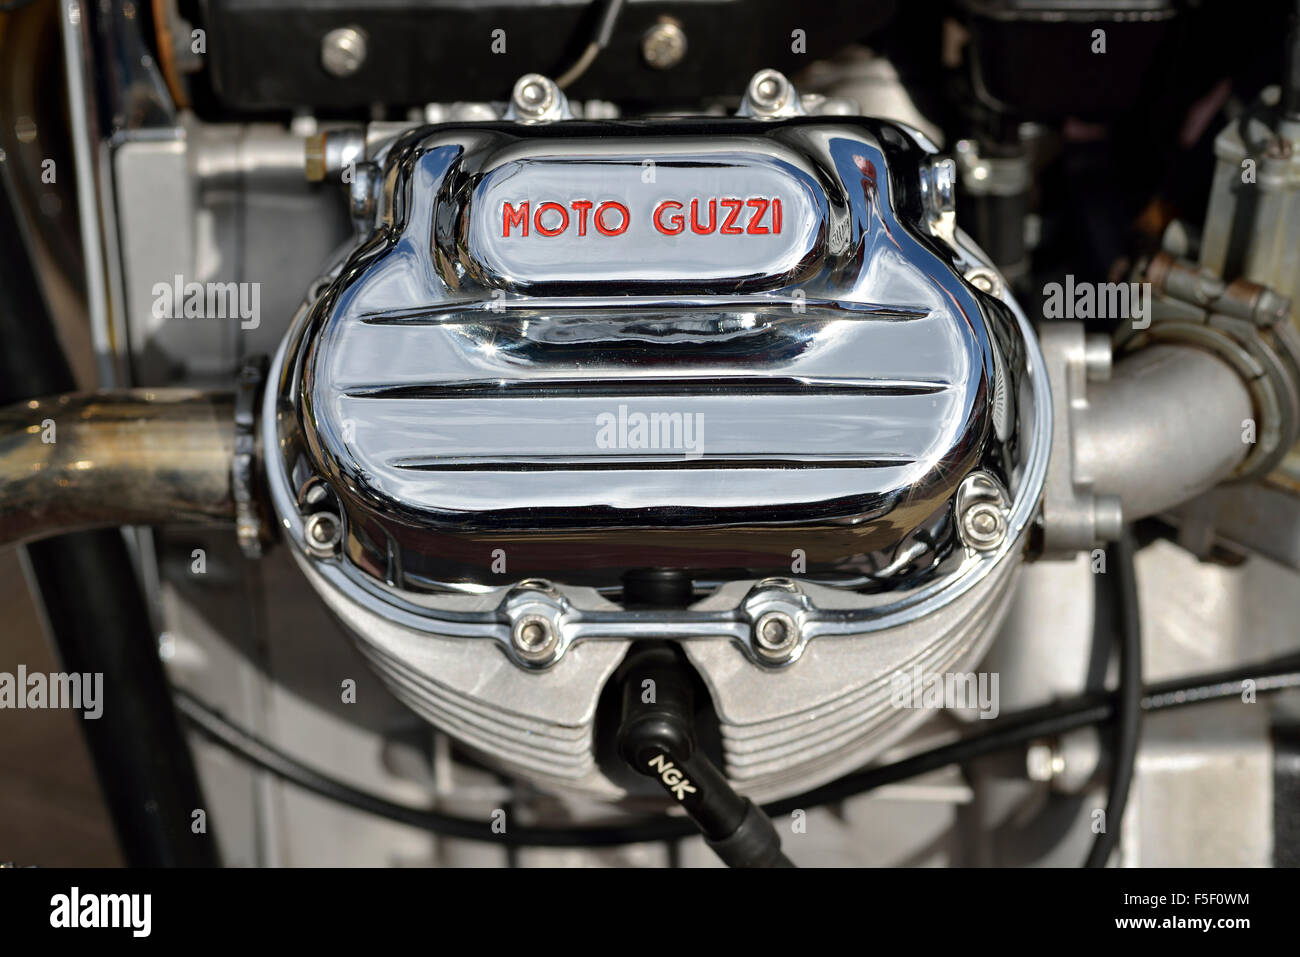 1972 Moto Guzzi V7 cylinder head Stock Photo - Alamy